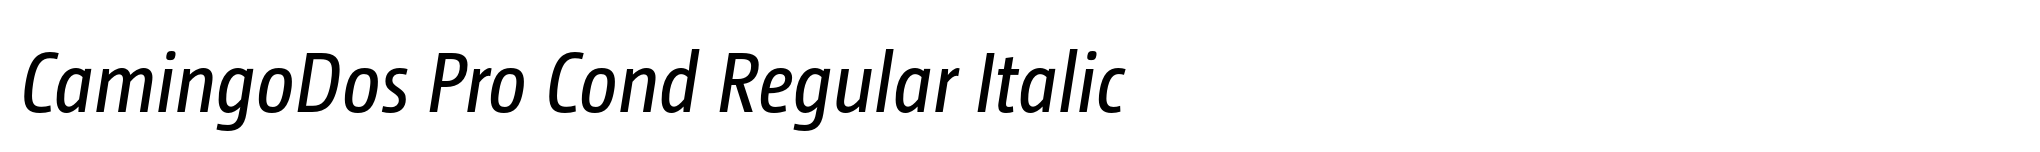 CamingoDos Pro Cond Regular Italic image